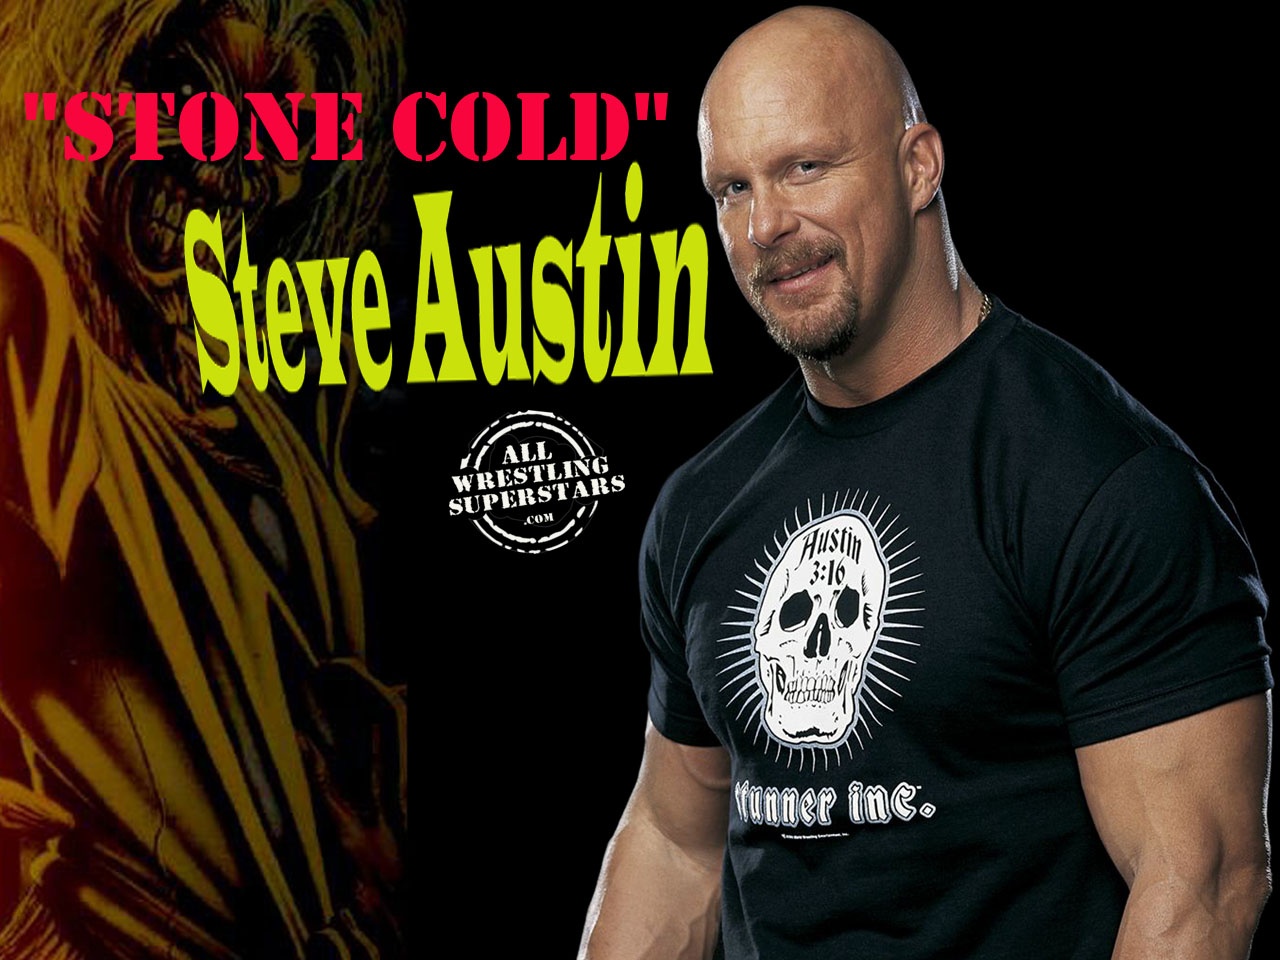 Pro Wrestler Stone Cold Steve Austin Endorses Same Sex Marriage